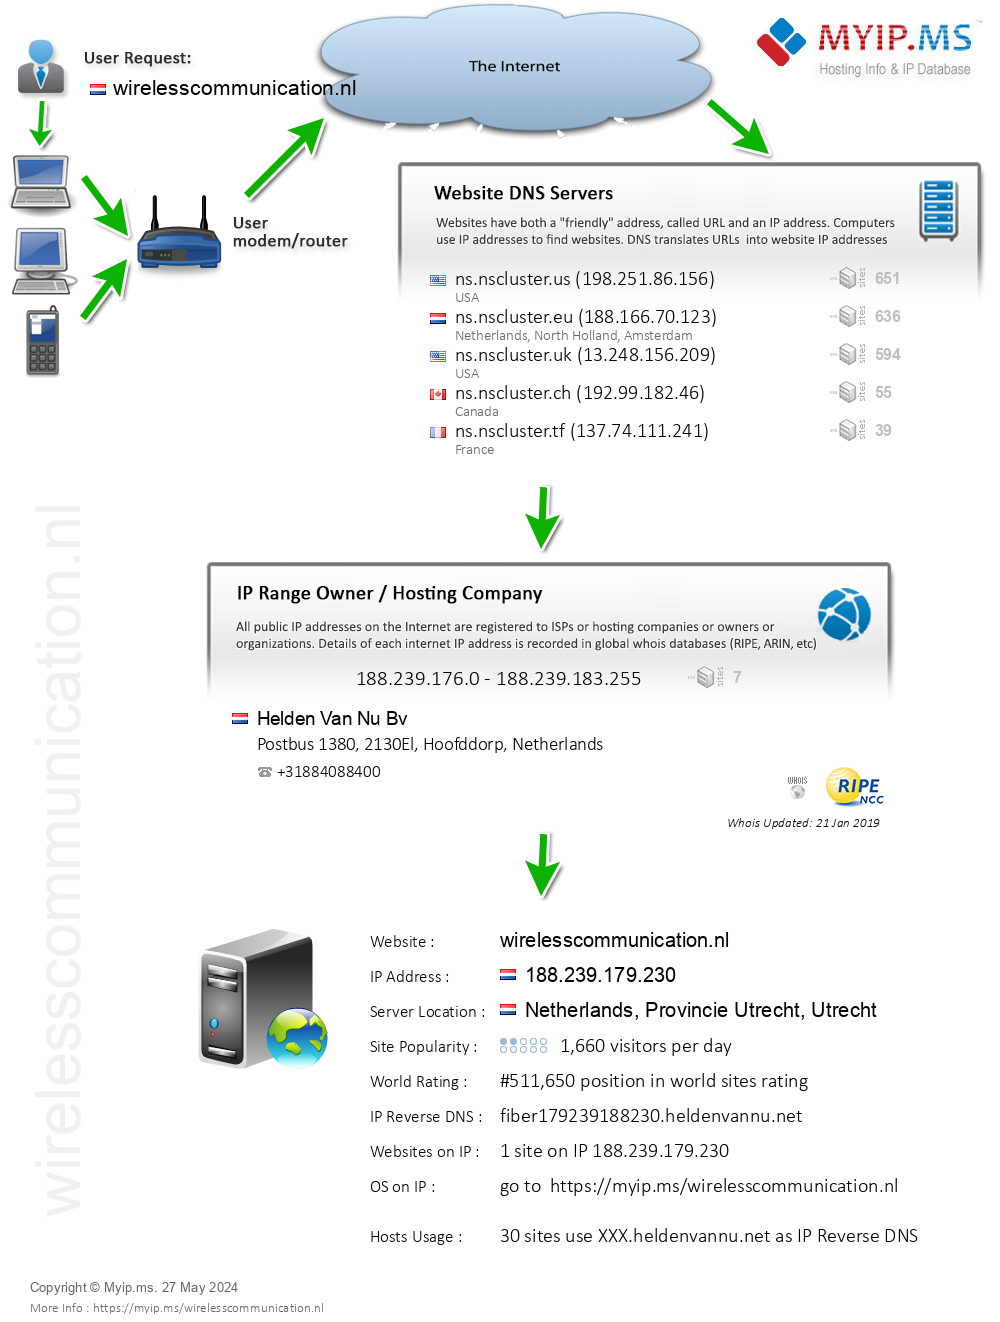 Wirelesscommunication.nl - Website Hosting Visual IP Diagram